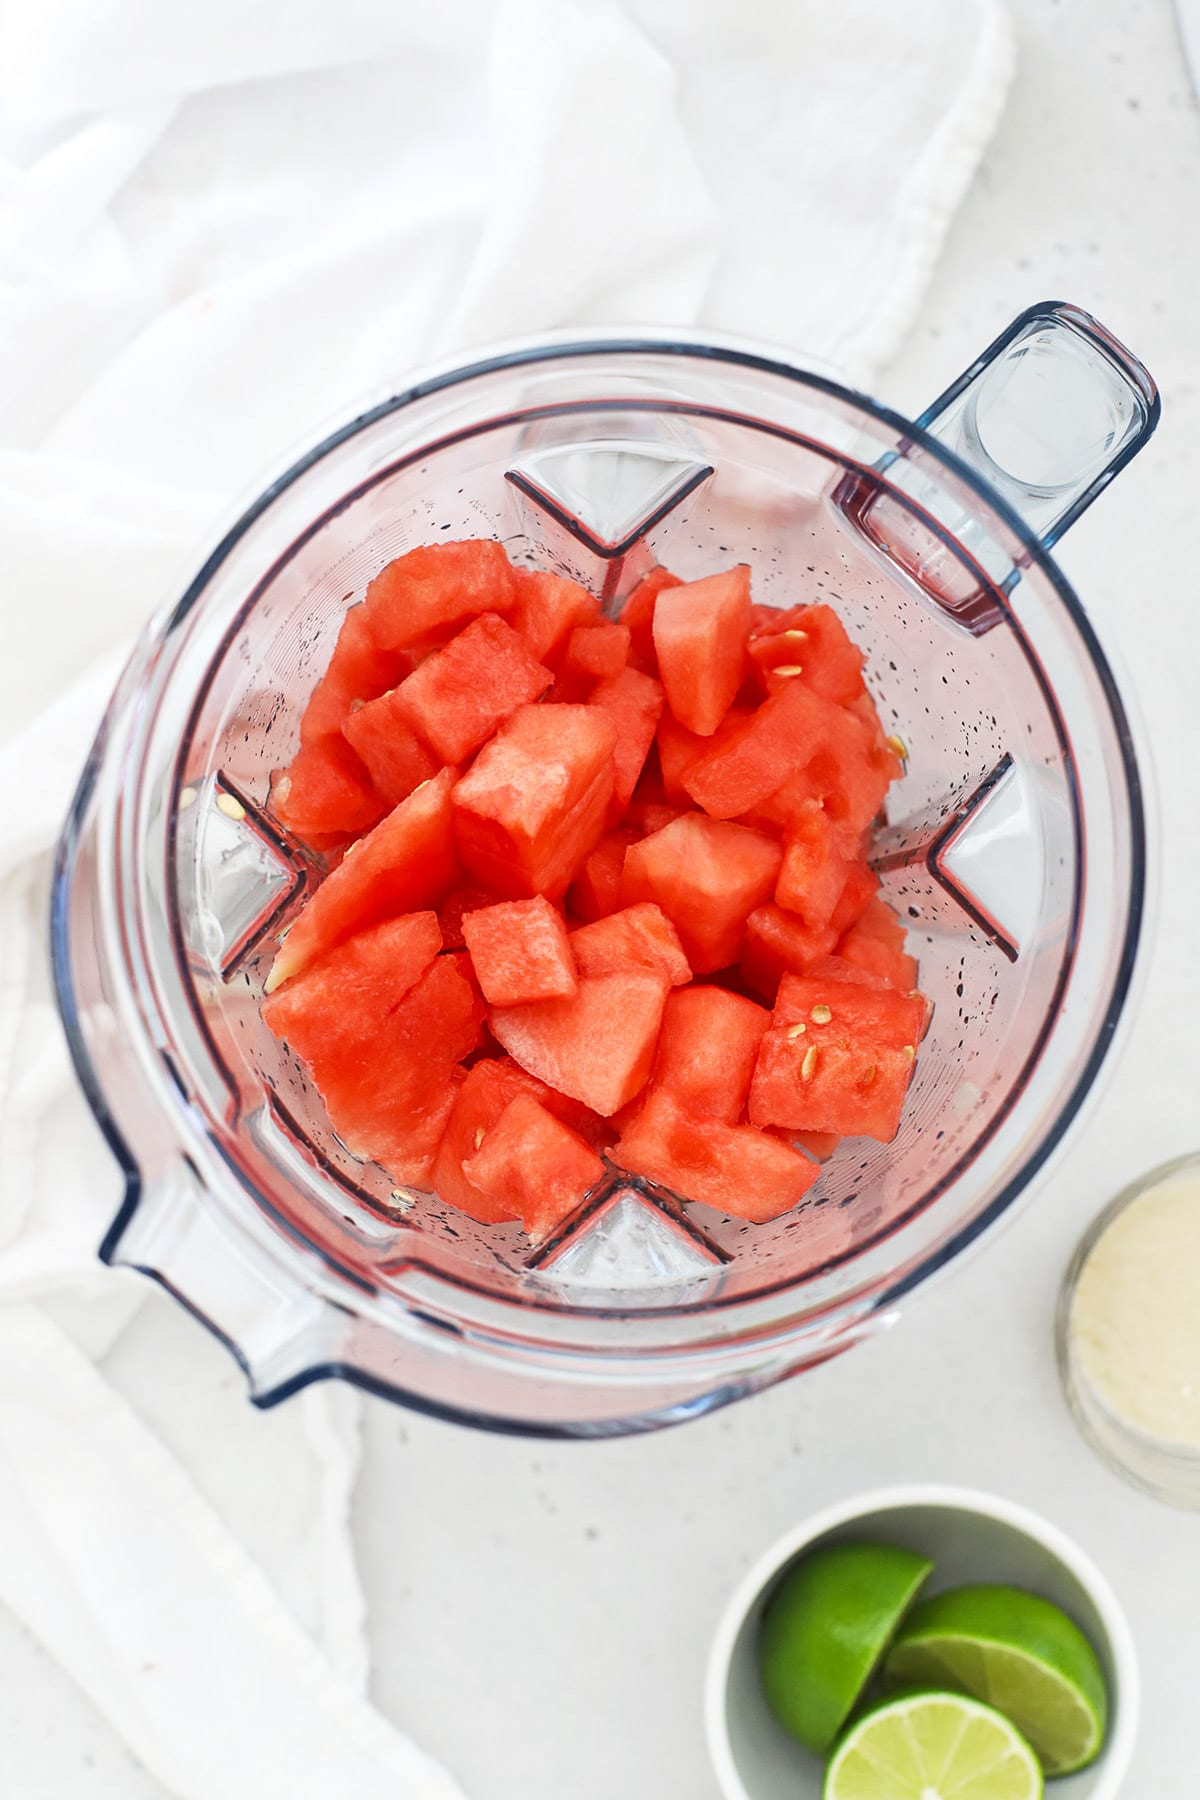 Adding watermelon to a blender to make agua de sandia (watermelon agua fresca)